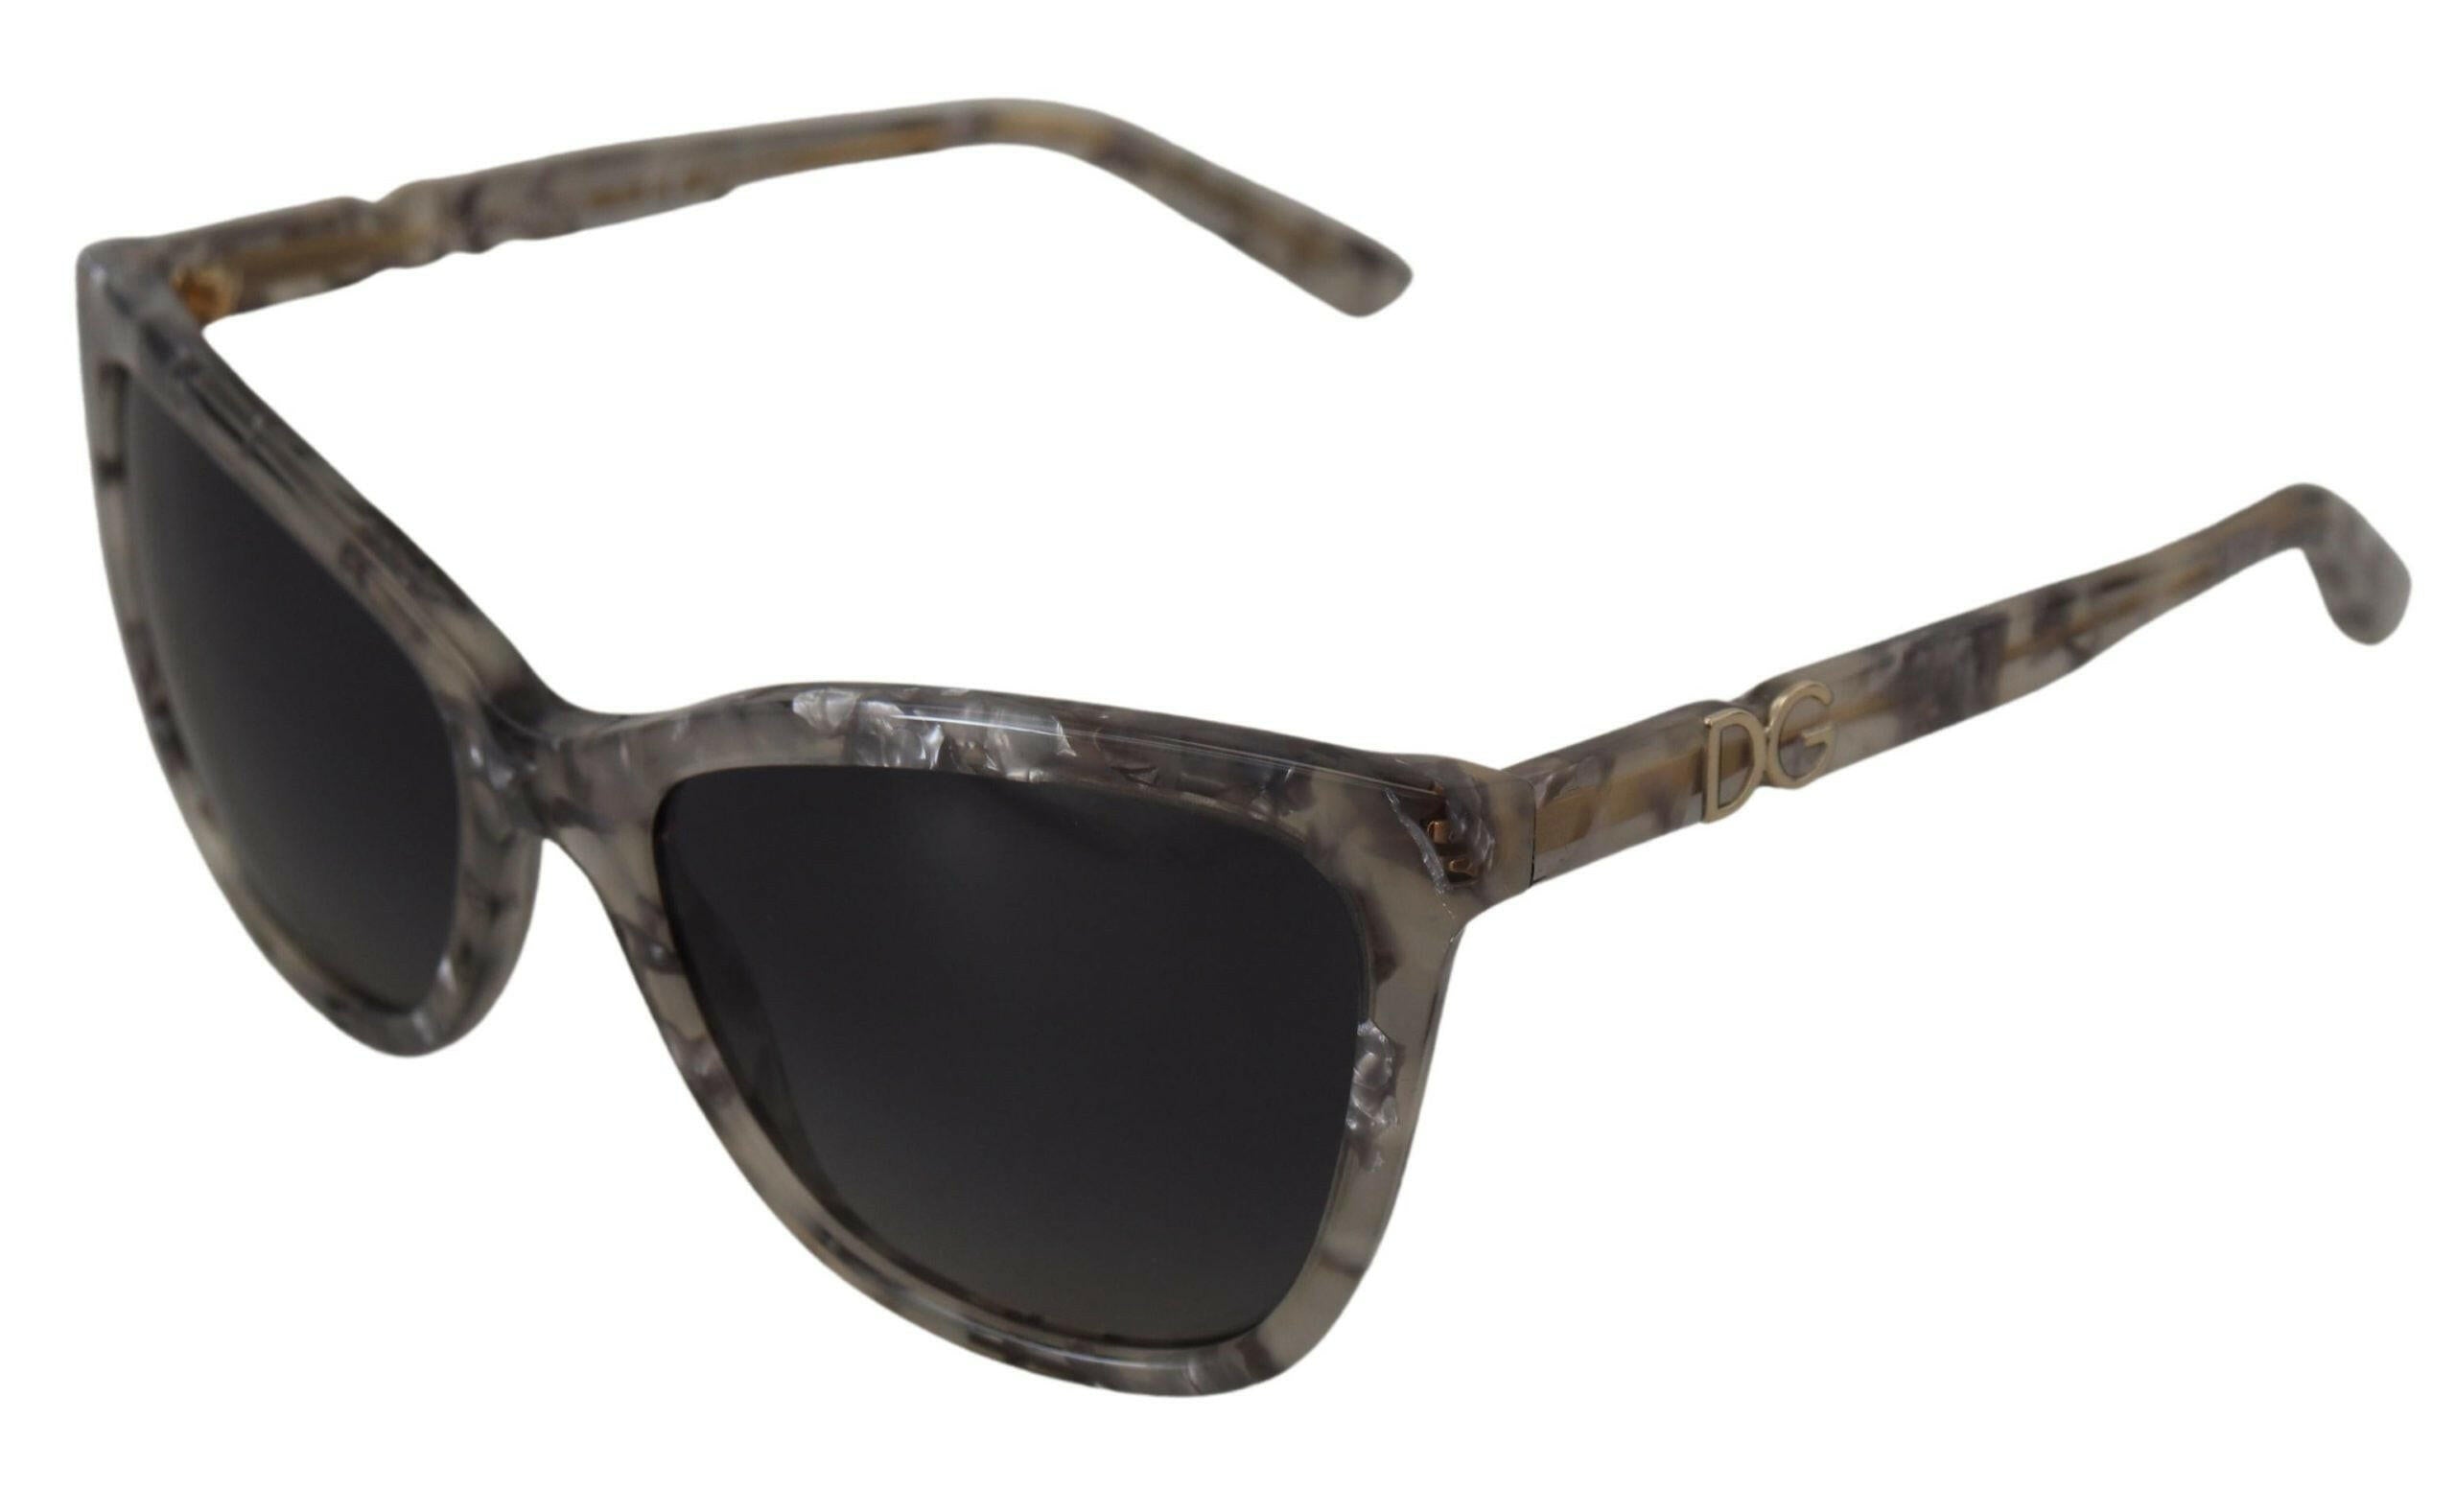 Dolce & Gabbana Grey Acetate Full Rim Cat Eye Frame DG4193 Sunglasses - GENUINE AUTHENTIC BRAND LLC  